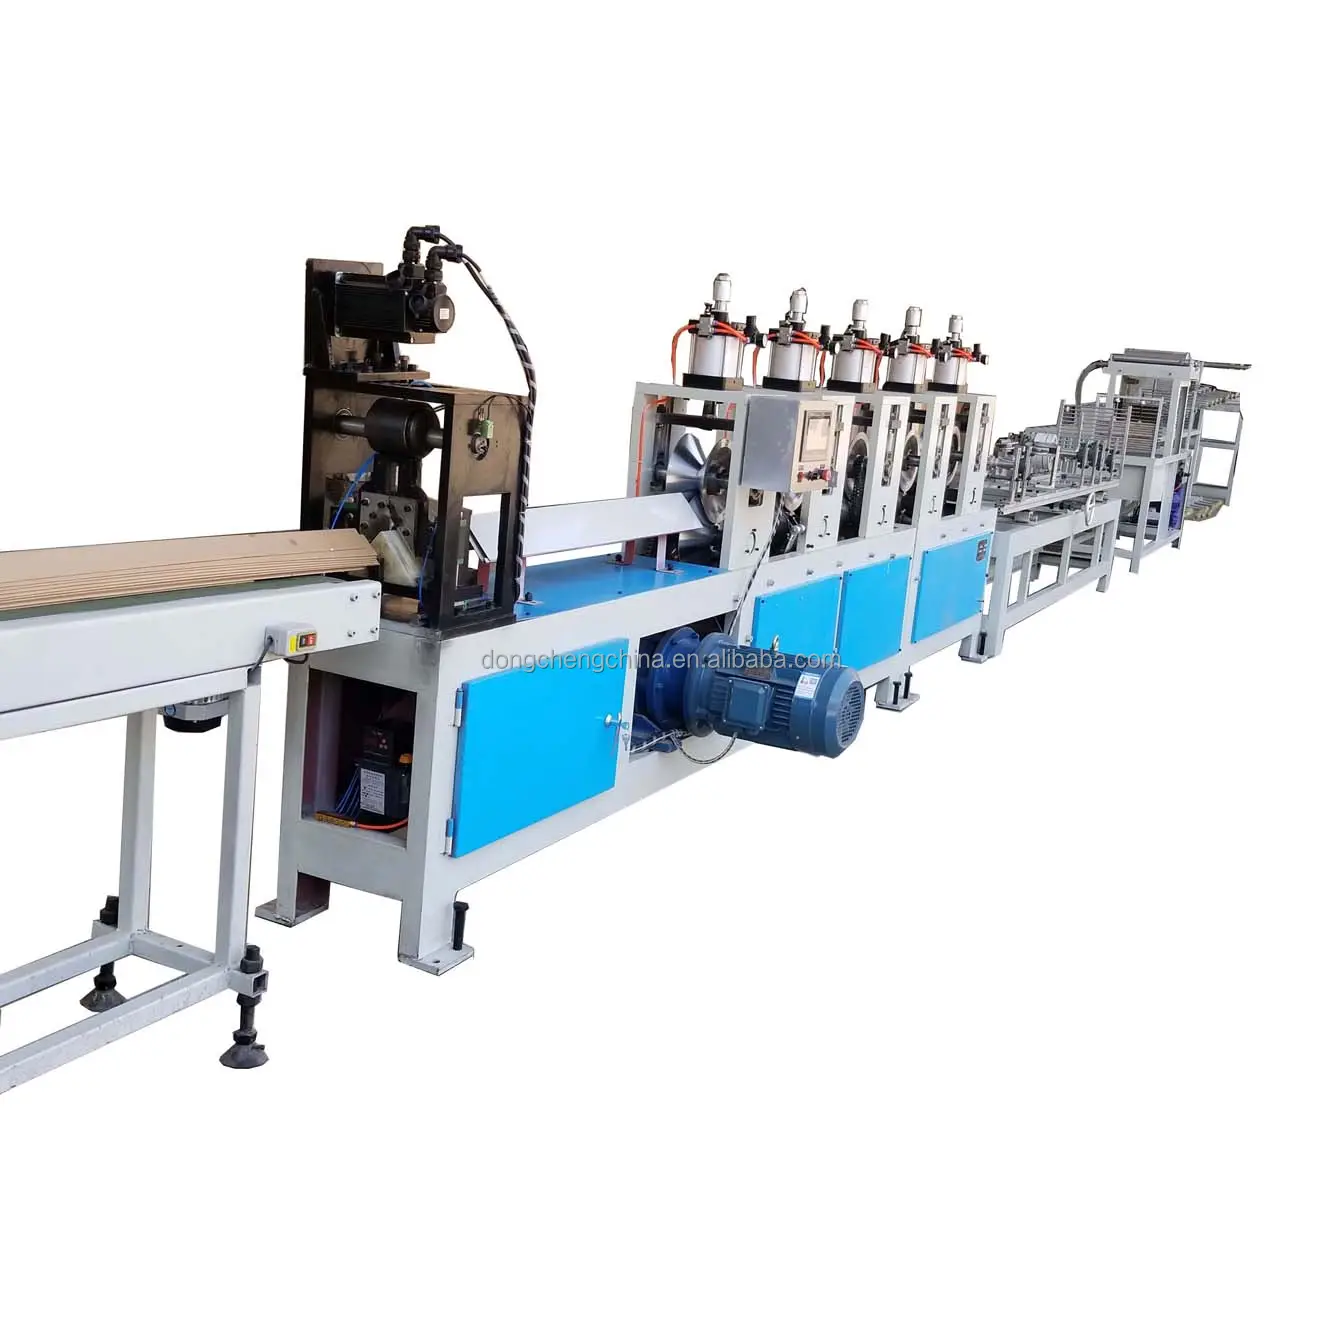 HJG series V shape Paper Edge board corner protector Machine supplier in china